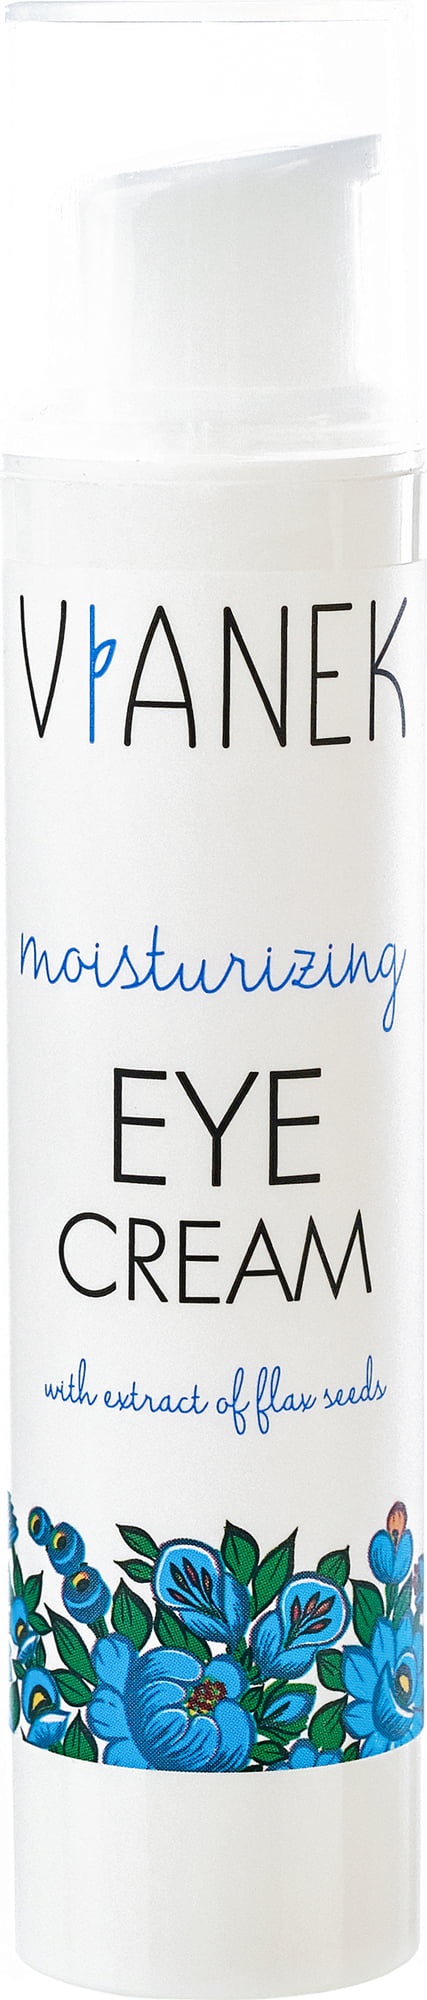 Vianek Moisturizing Eye Cream